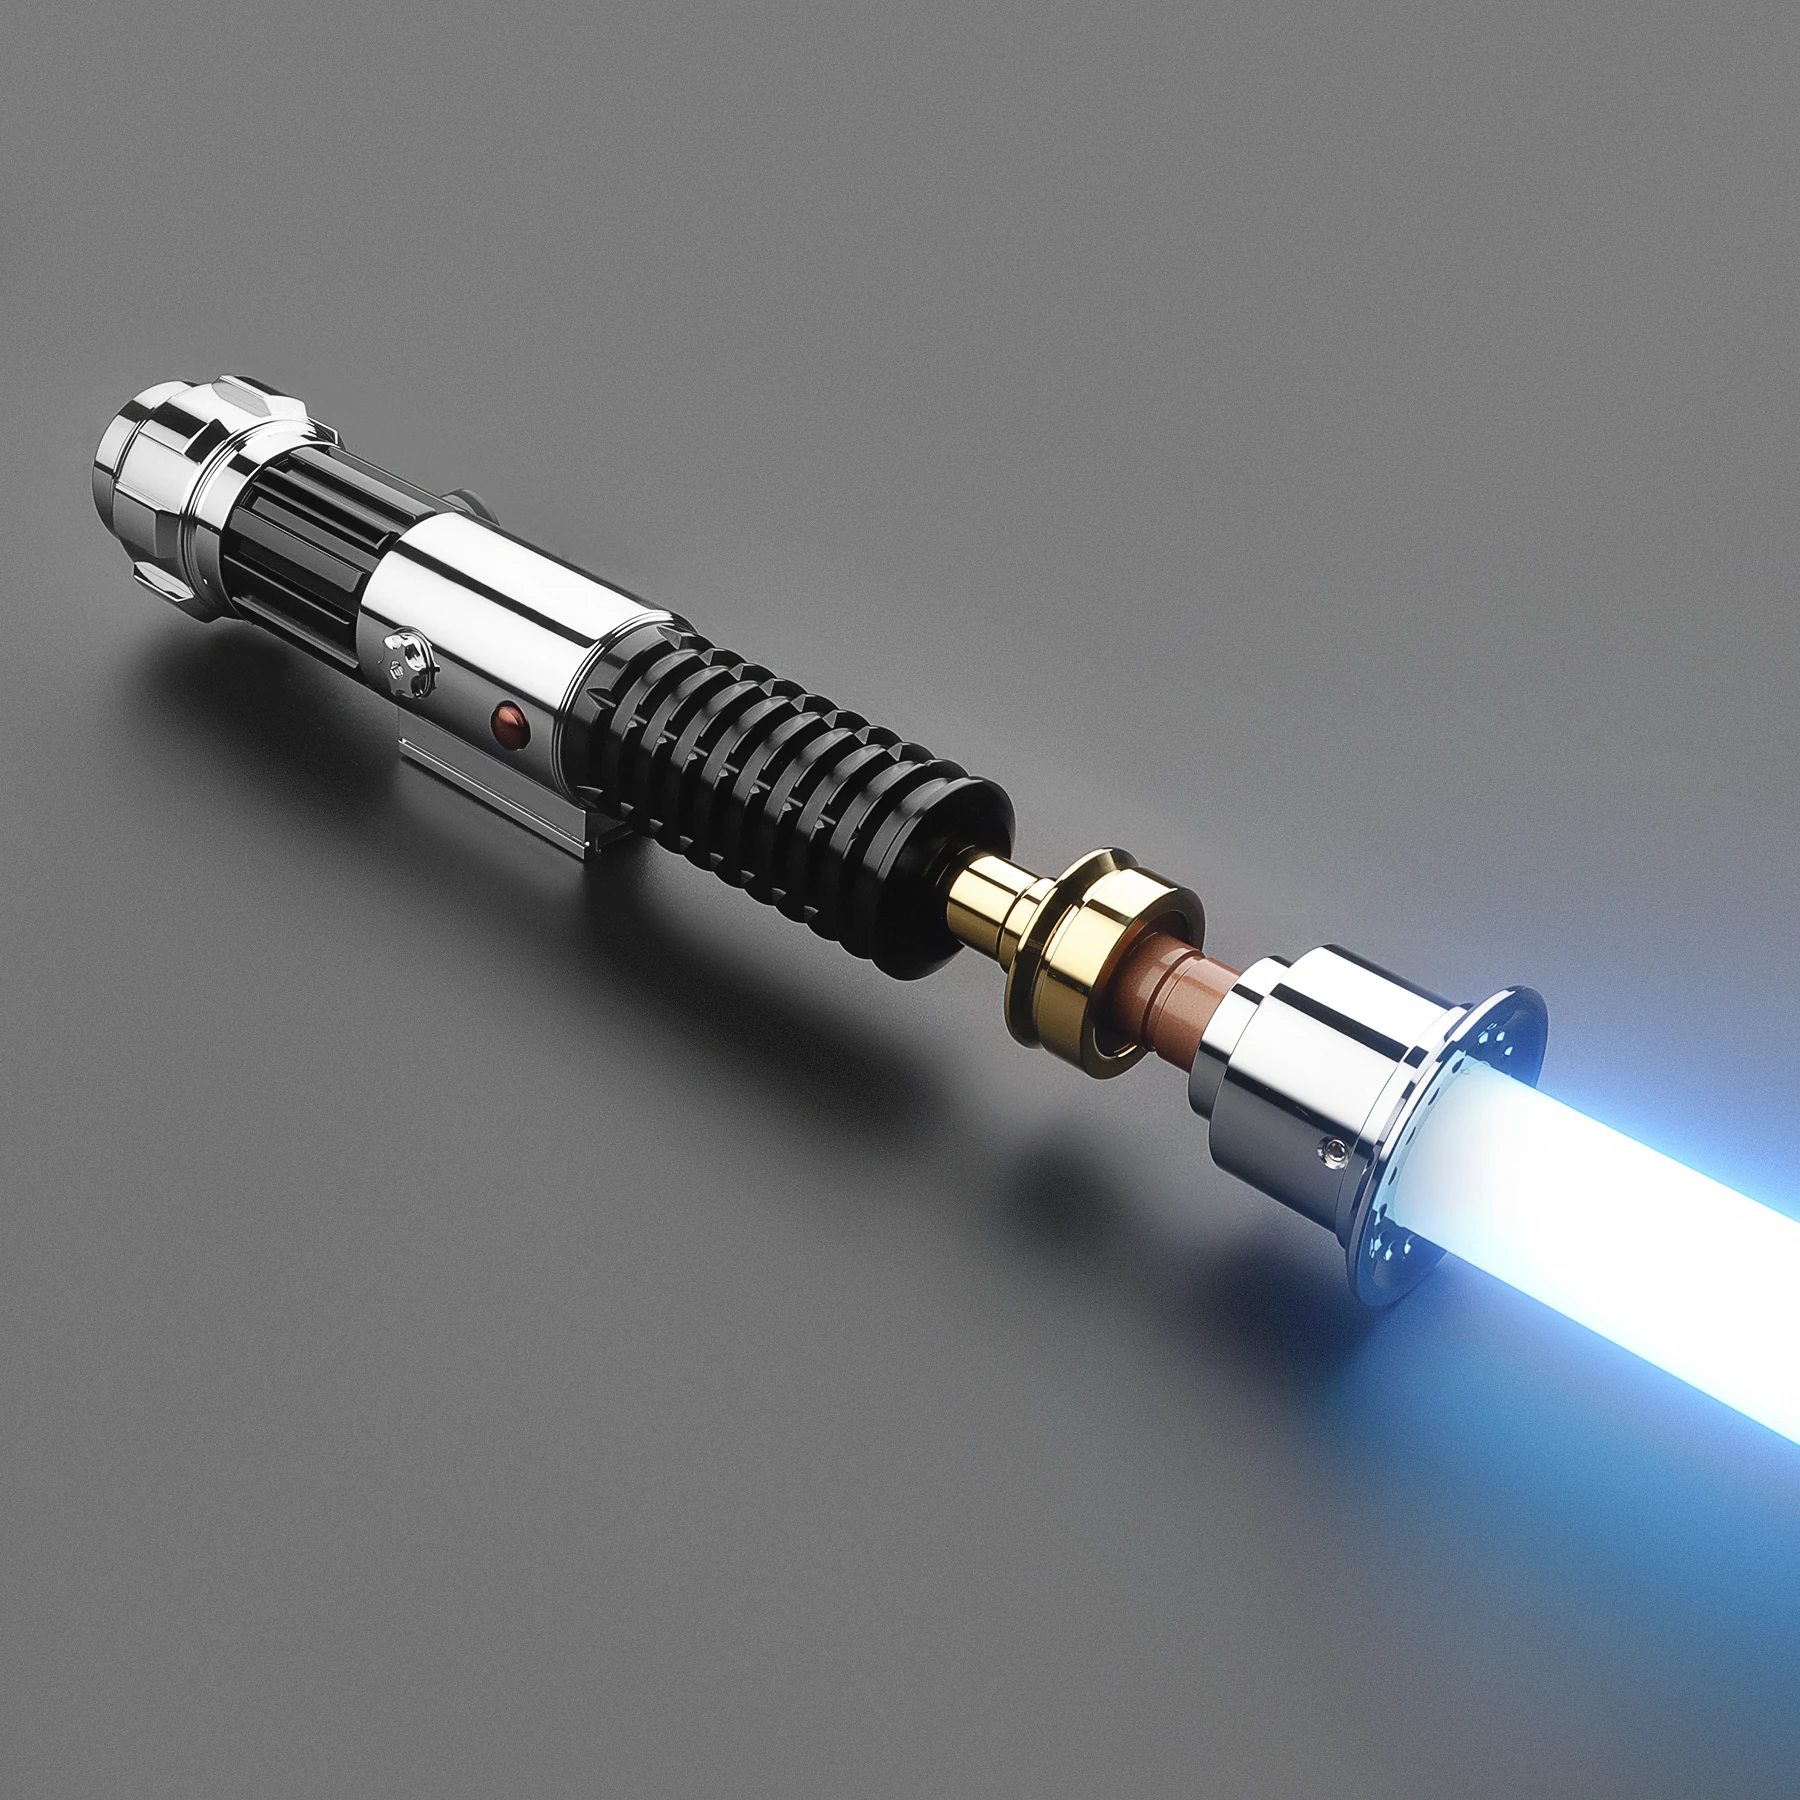 

LGT Saberstudio Obi-Wan Kenobi EP3 Xeno3.0 Lightsaber Proffie Sensitive Smooth Swing Metal Hilt Force Heavy Dueling Bluetooth